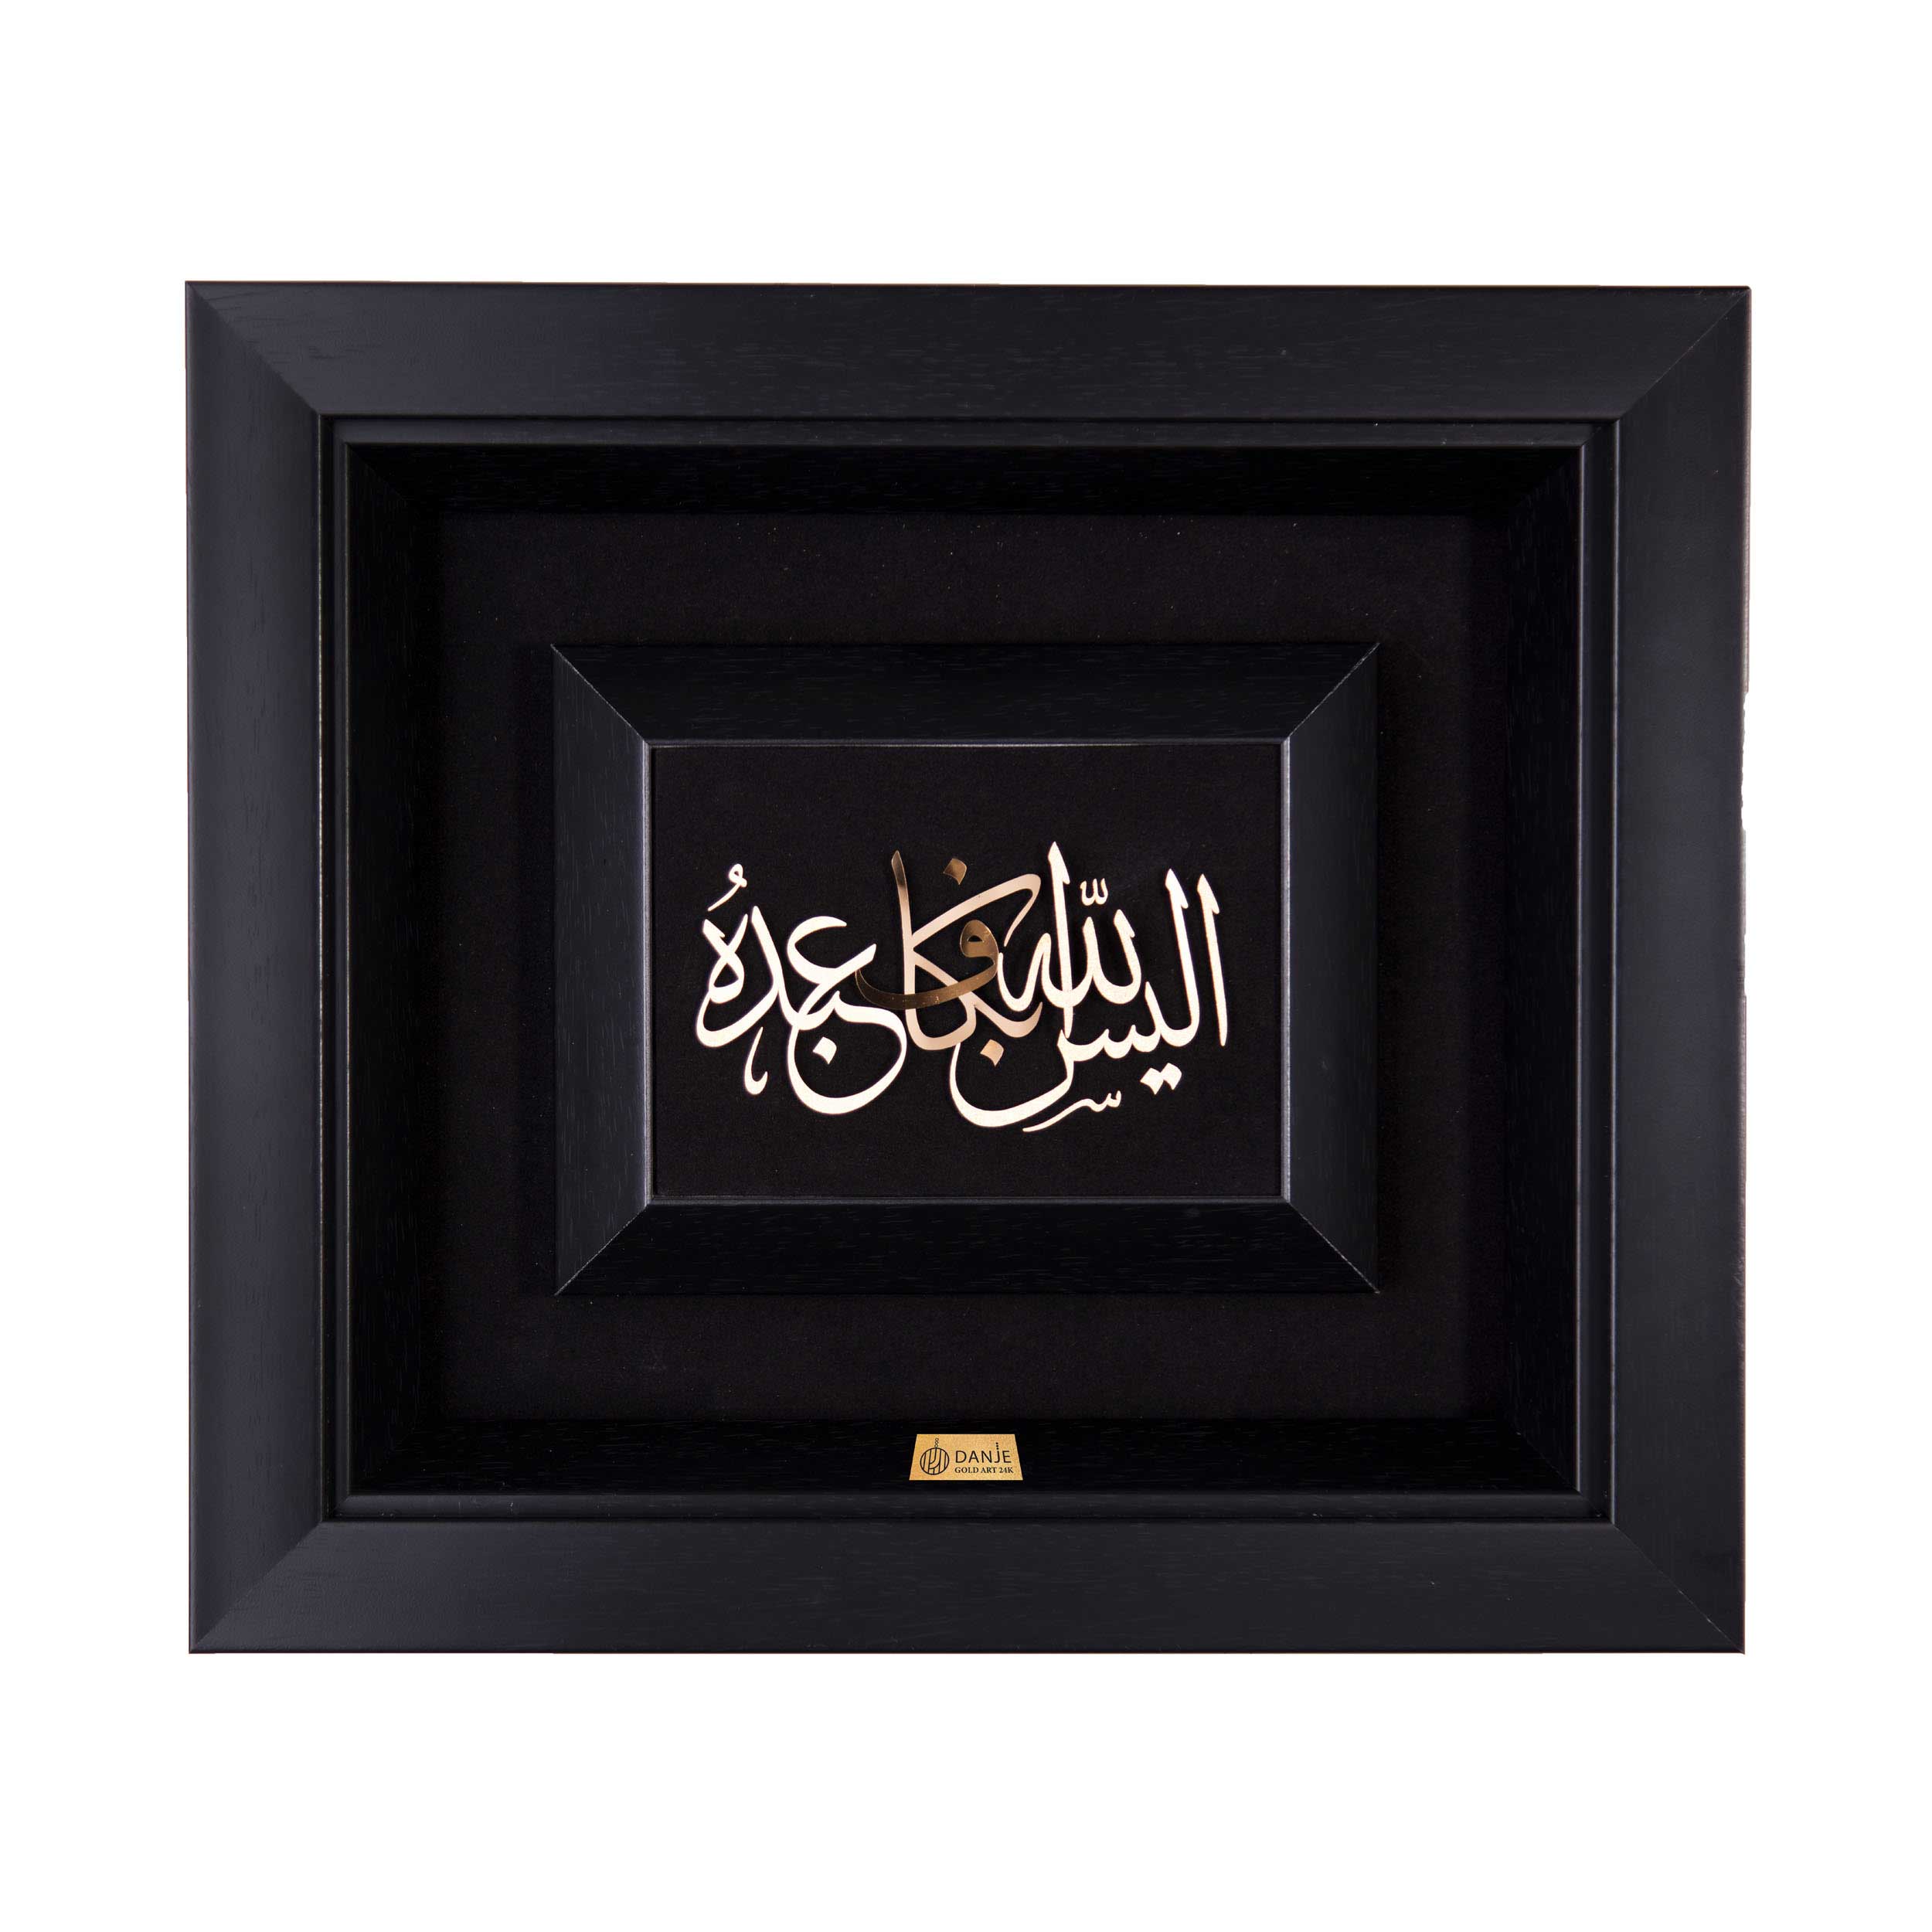 24 carat gold leaf panel with PVC frame designed by Ellisullah Danjeh brand